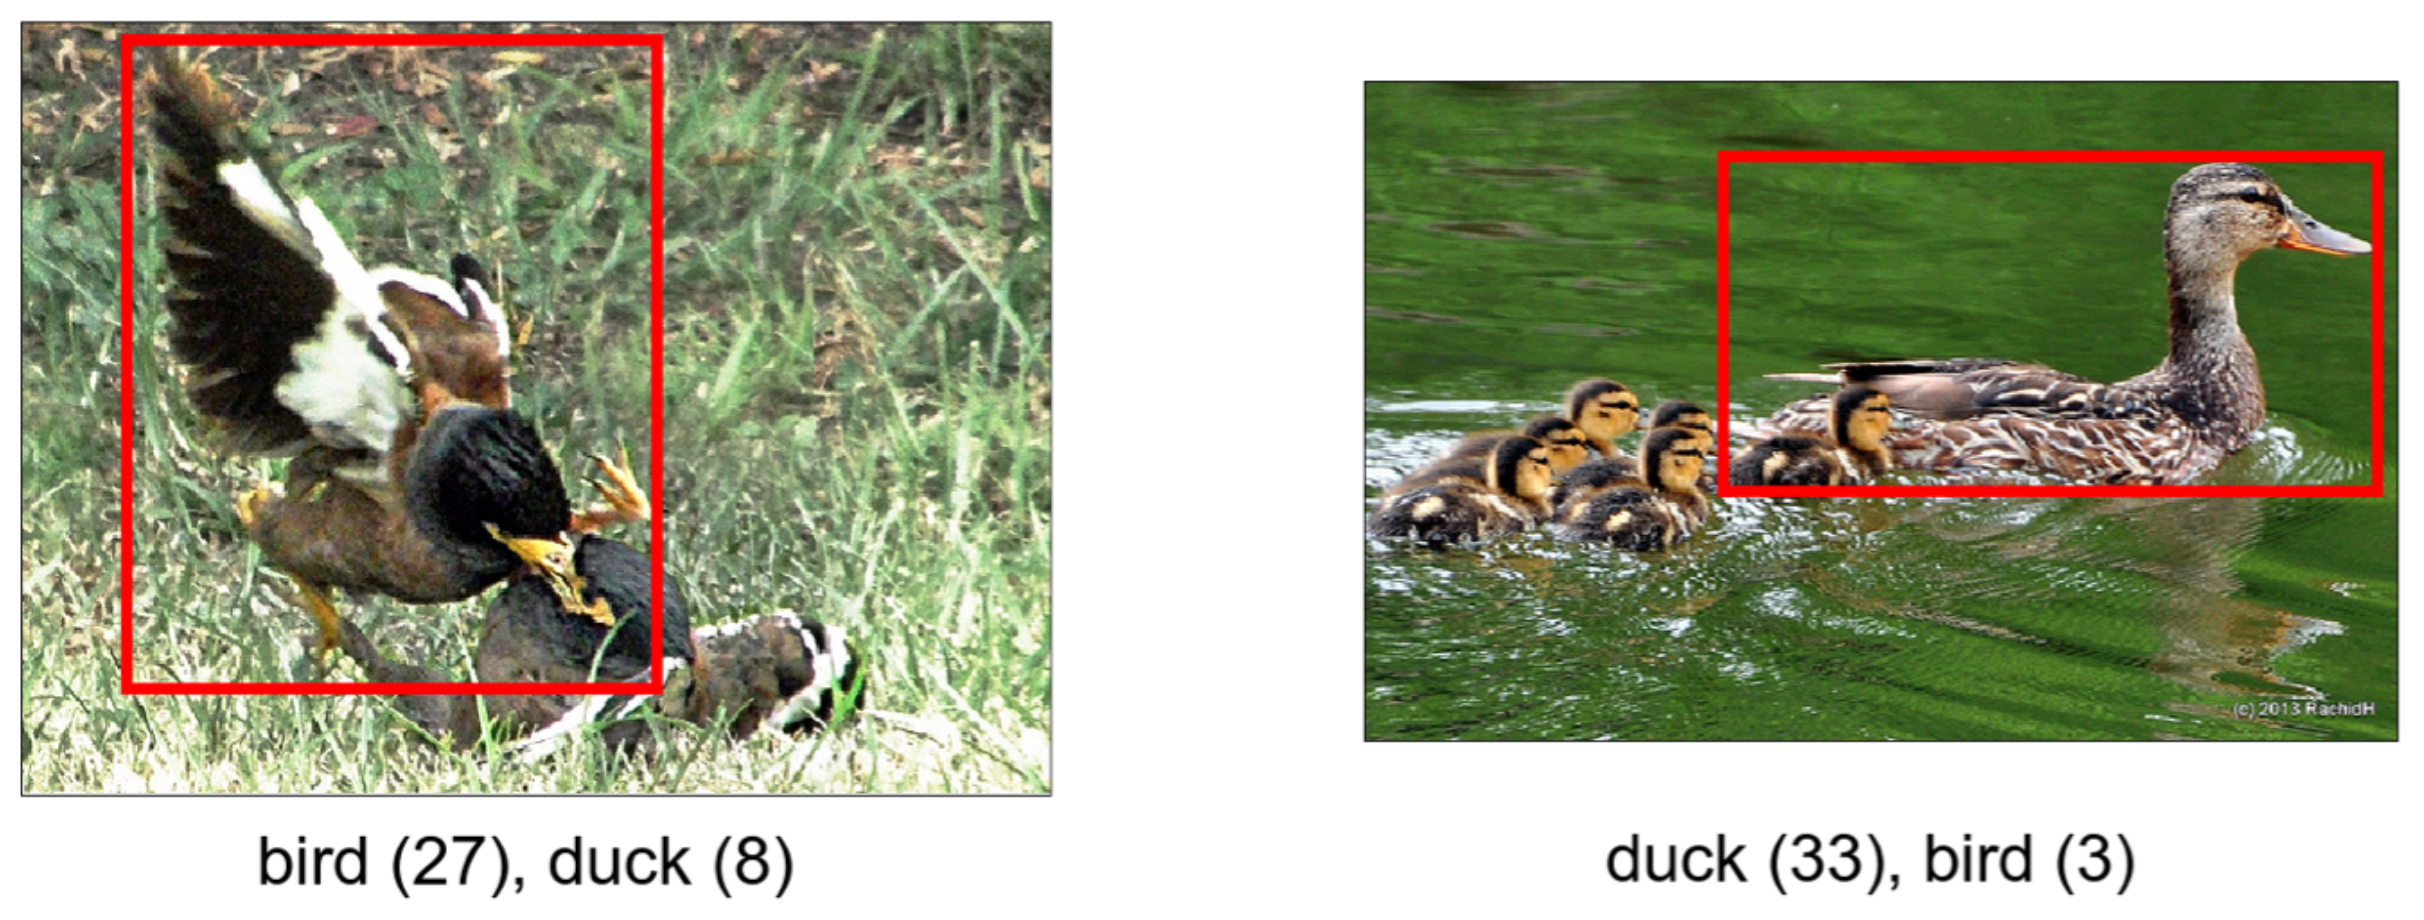 Photos of ducks from the ManyNames dataset (Silberer et al., 2020).